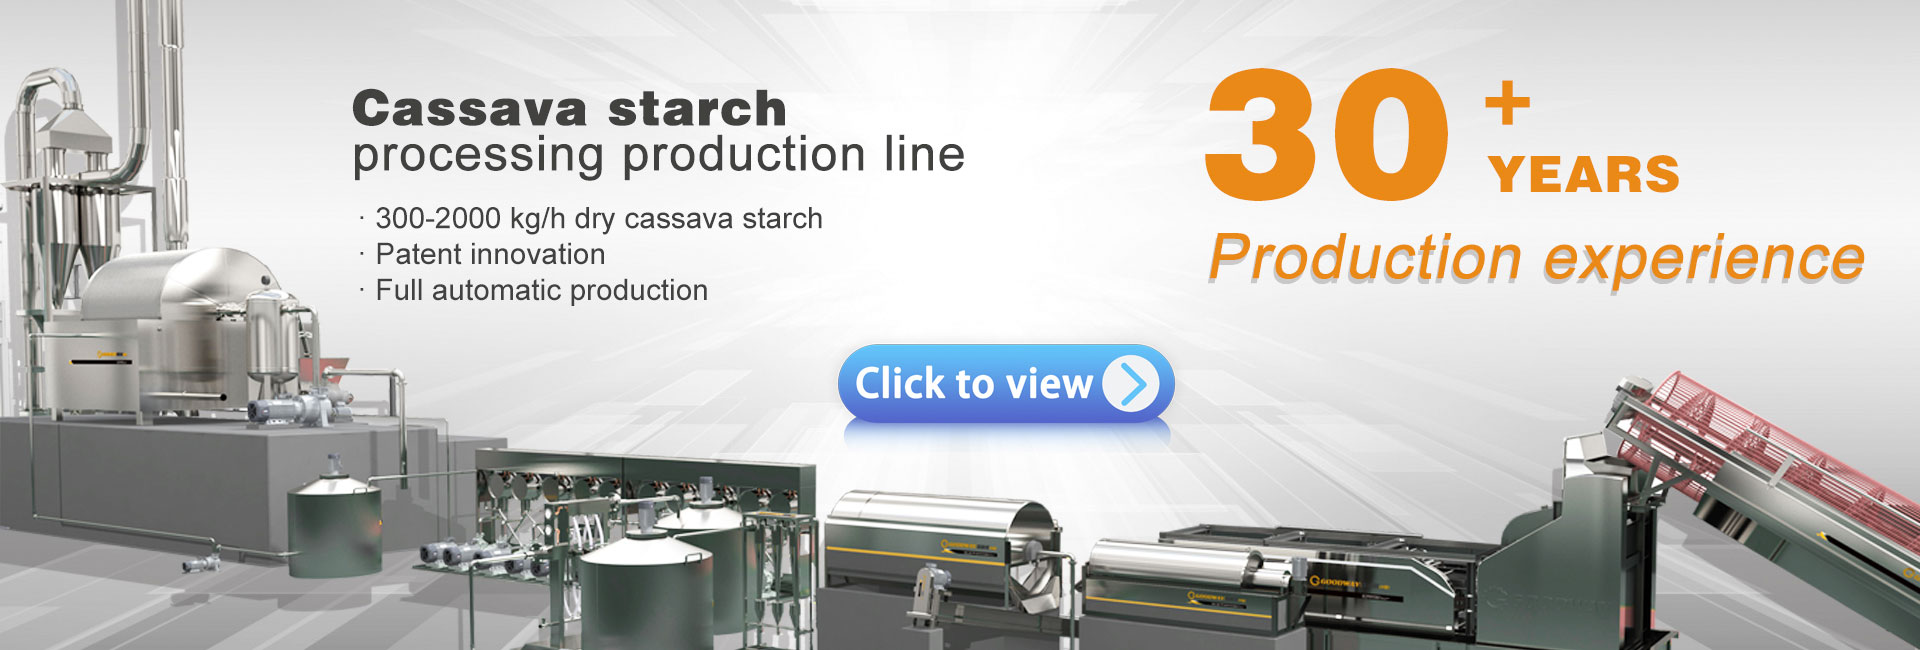 cassava starch processing production line